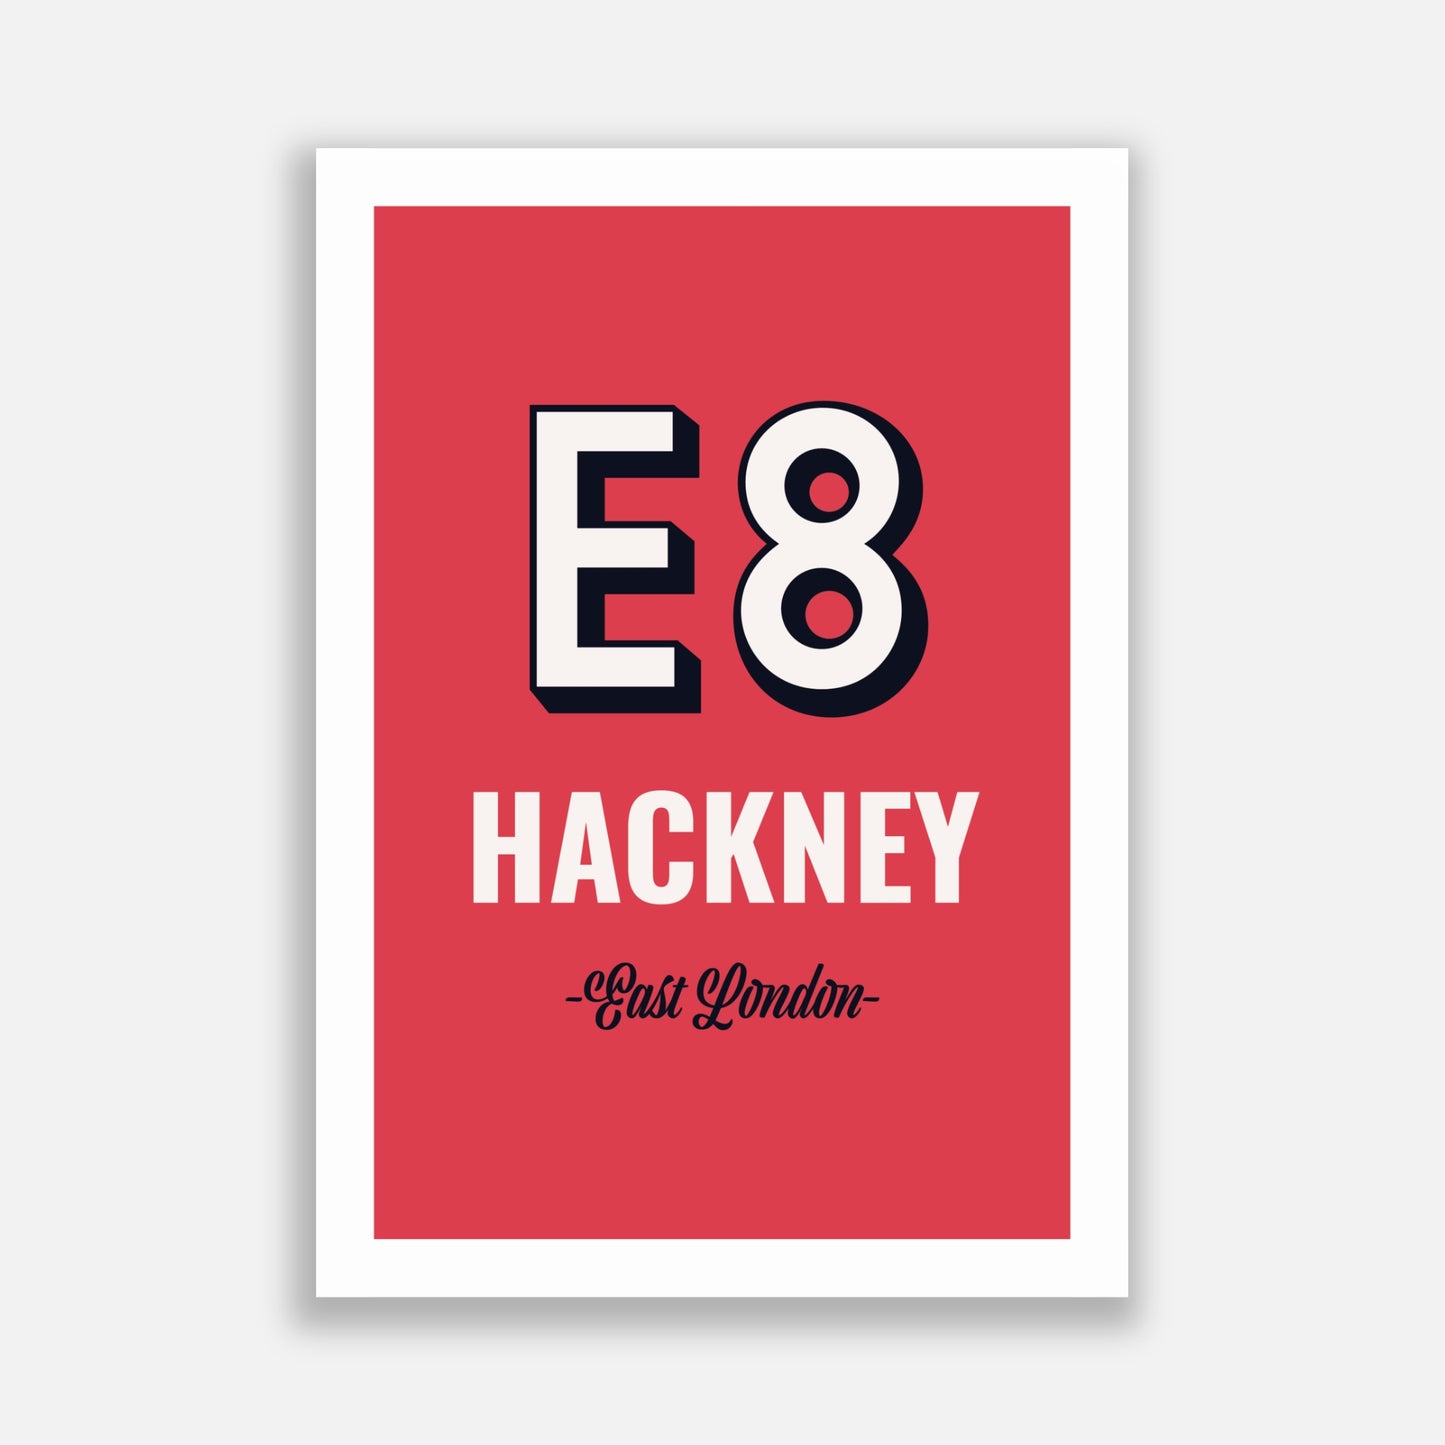 Hackney E8 Postcode Poster